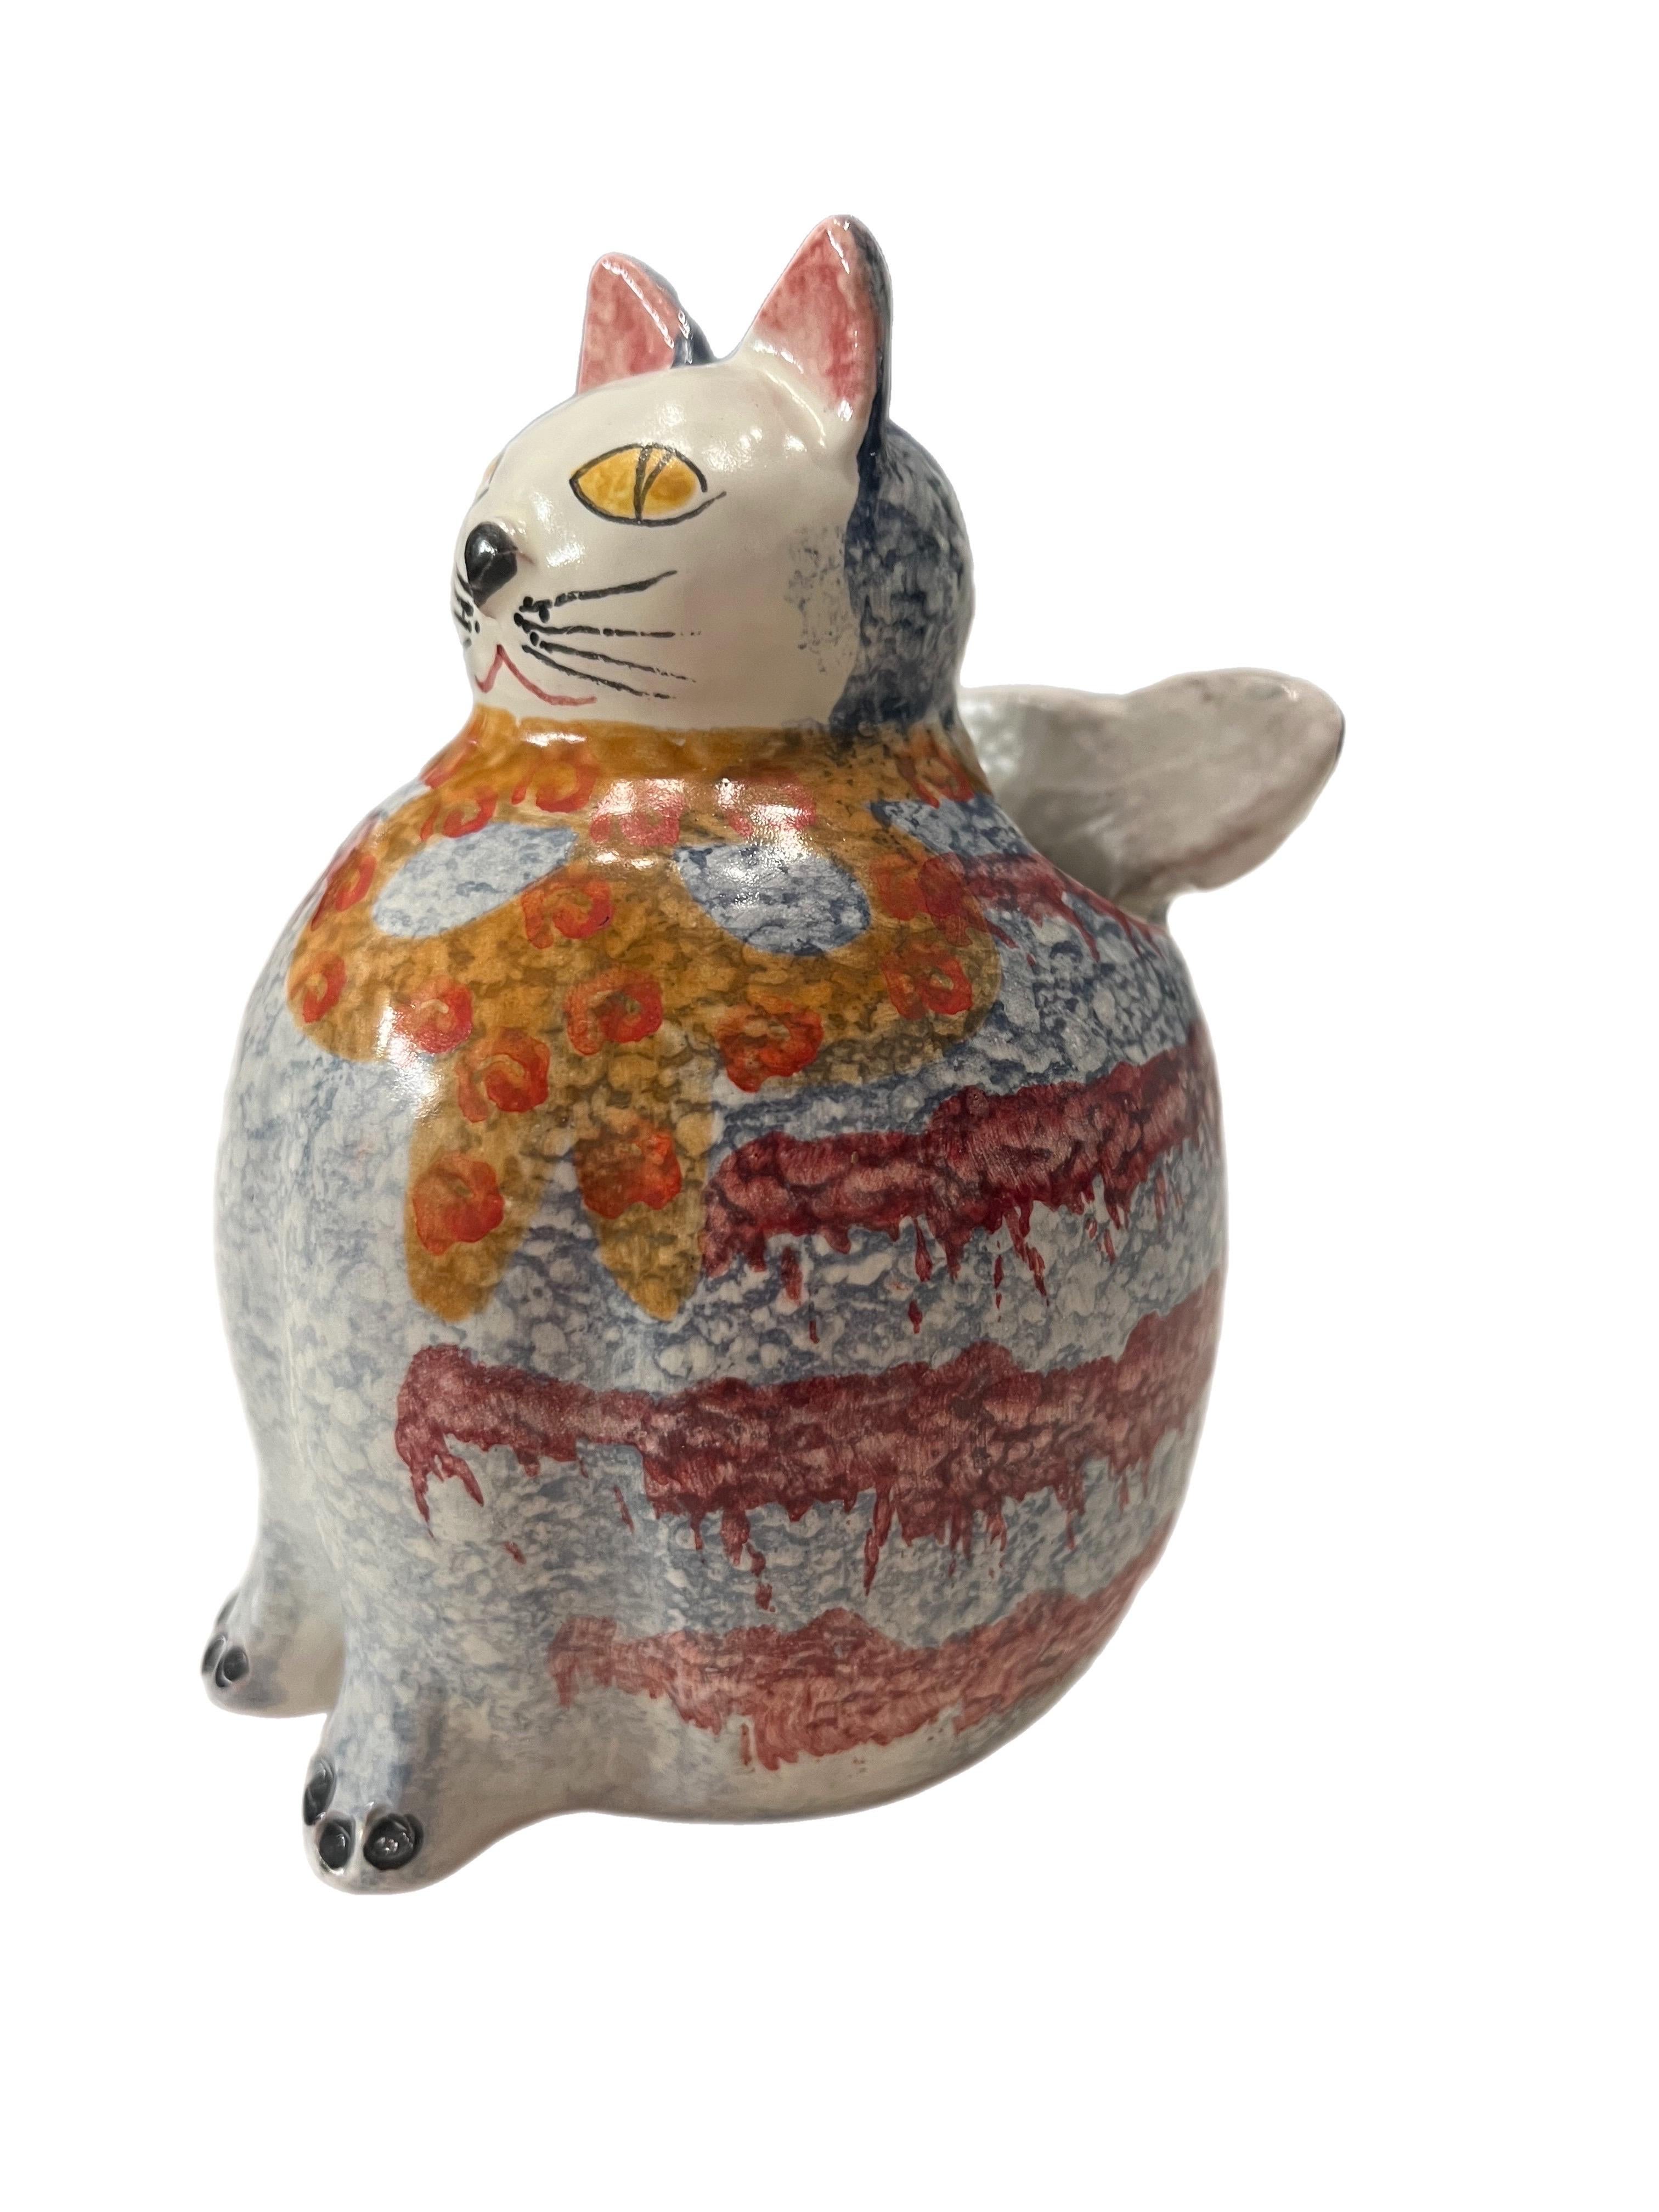 Vintage 1970s Italian Ars Hand-Painted Ceramic Cat Utensil Holder or Vase In Good Condition For Sale In Charleston, SC